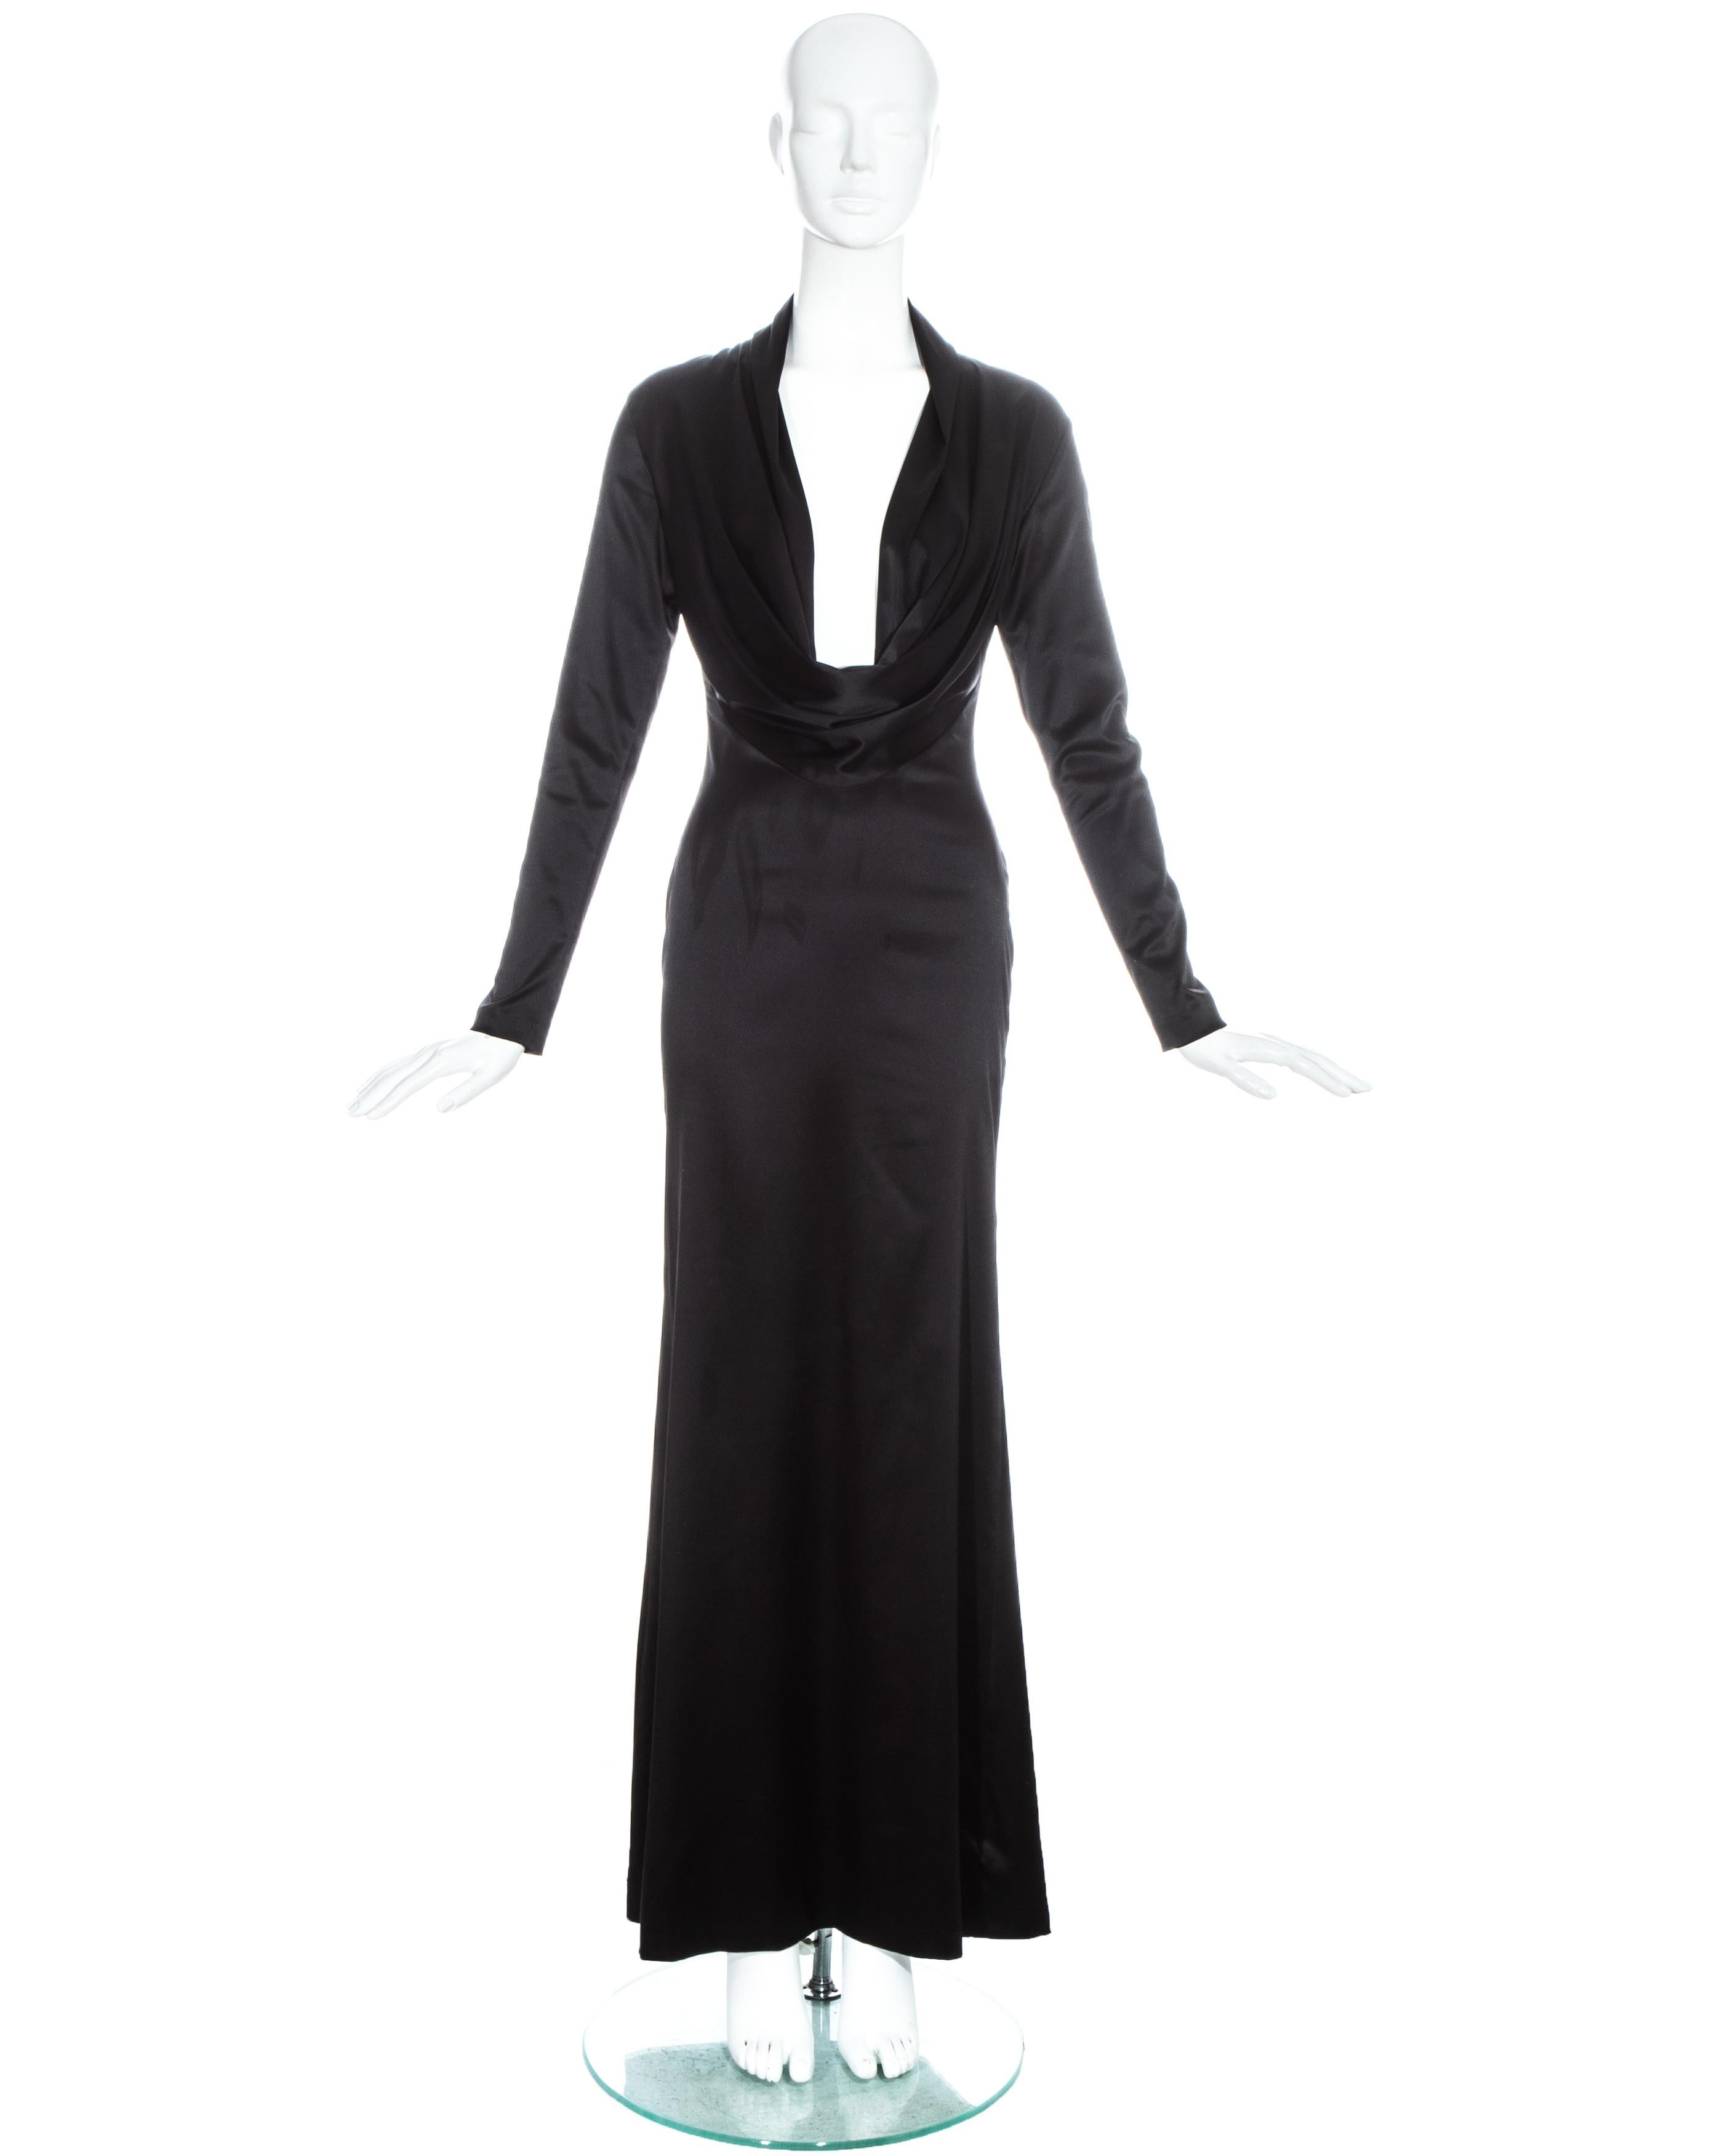 Alexander McQueen black evening maxi dress with draped low plunge neckline.

Fall-Winter 1998